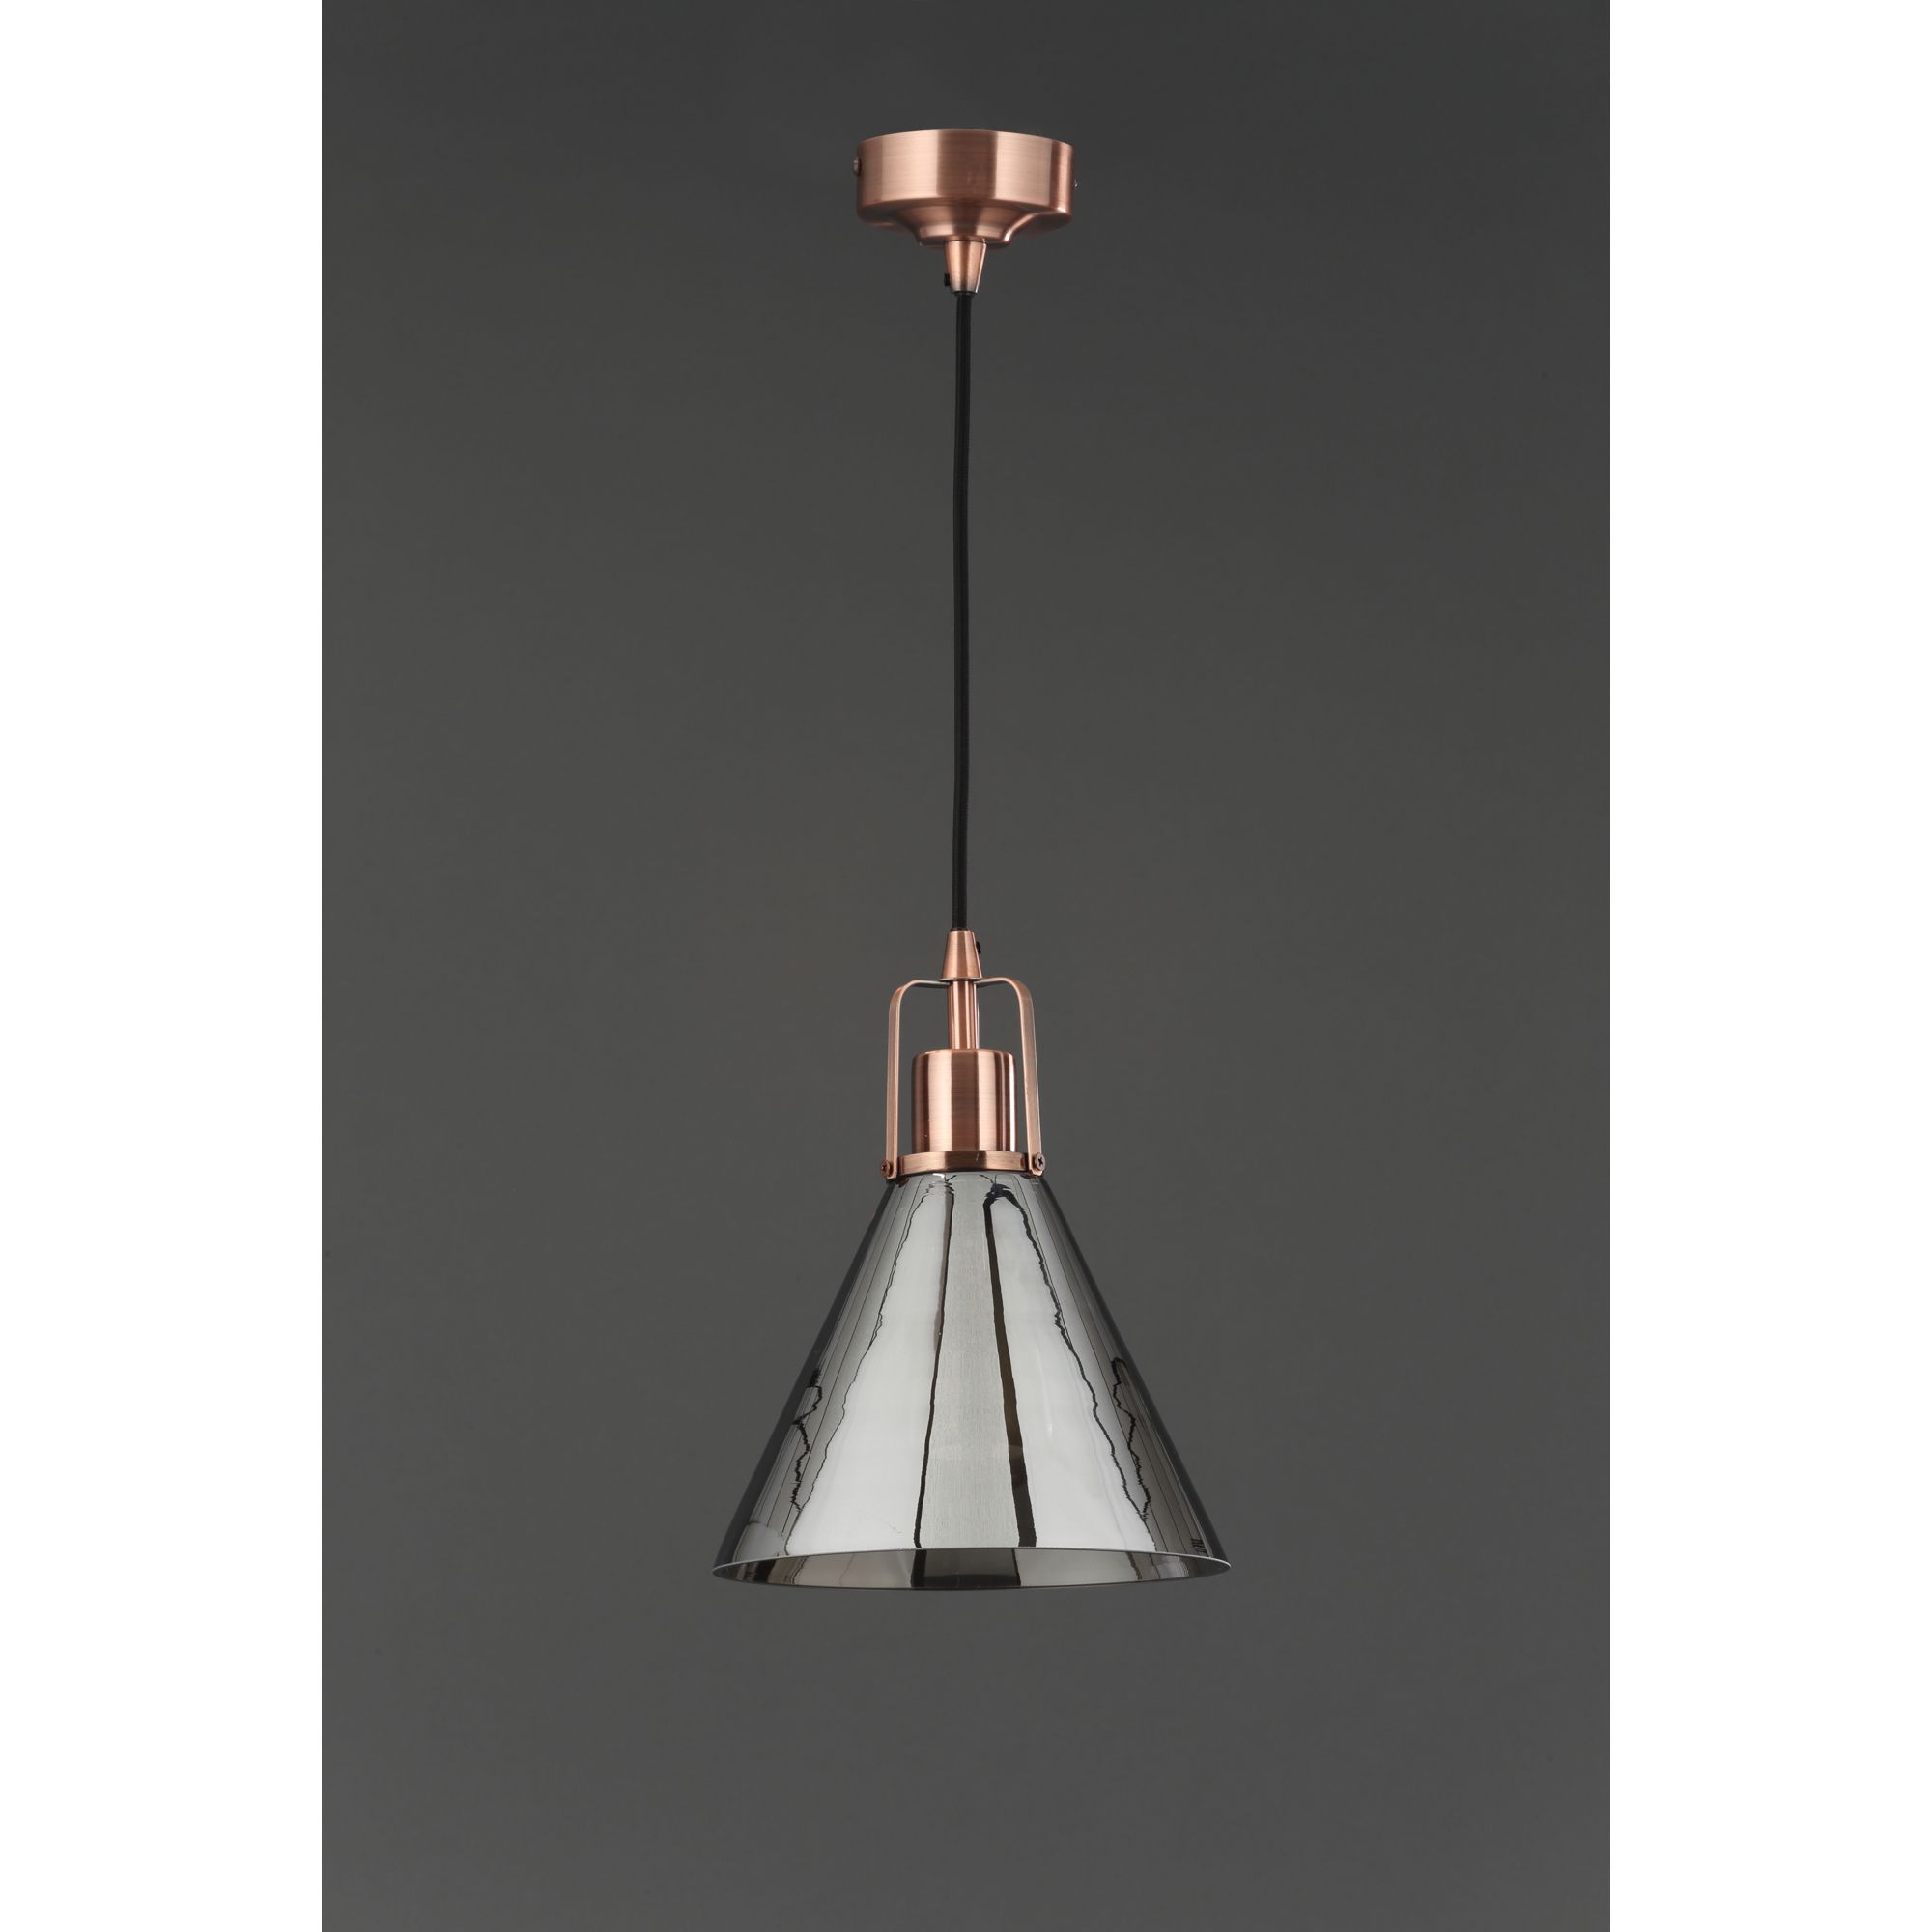 Inlight Dafyd Pendant Glass & metal Antique copper effect Ceiling light